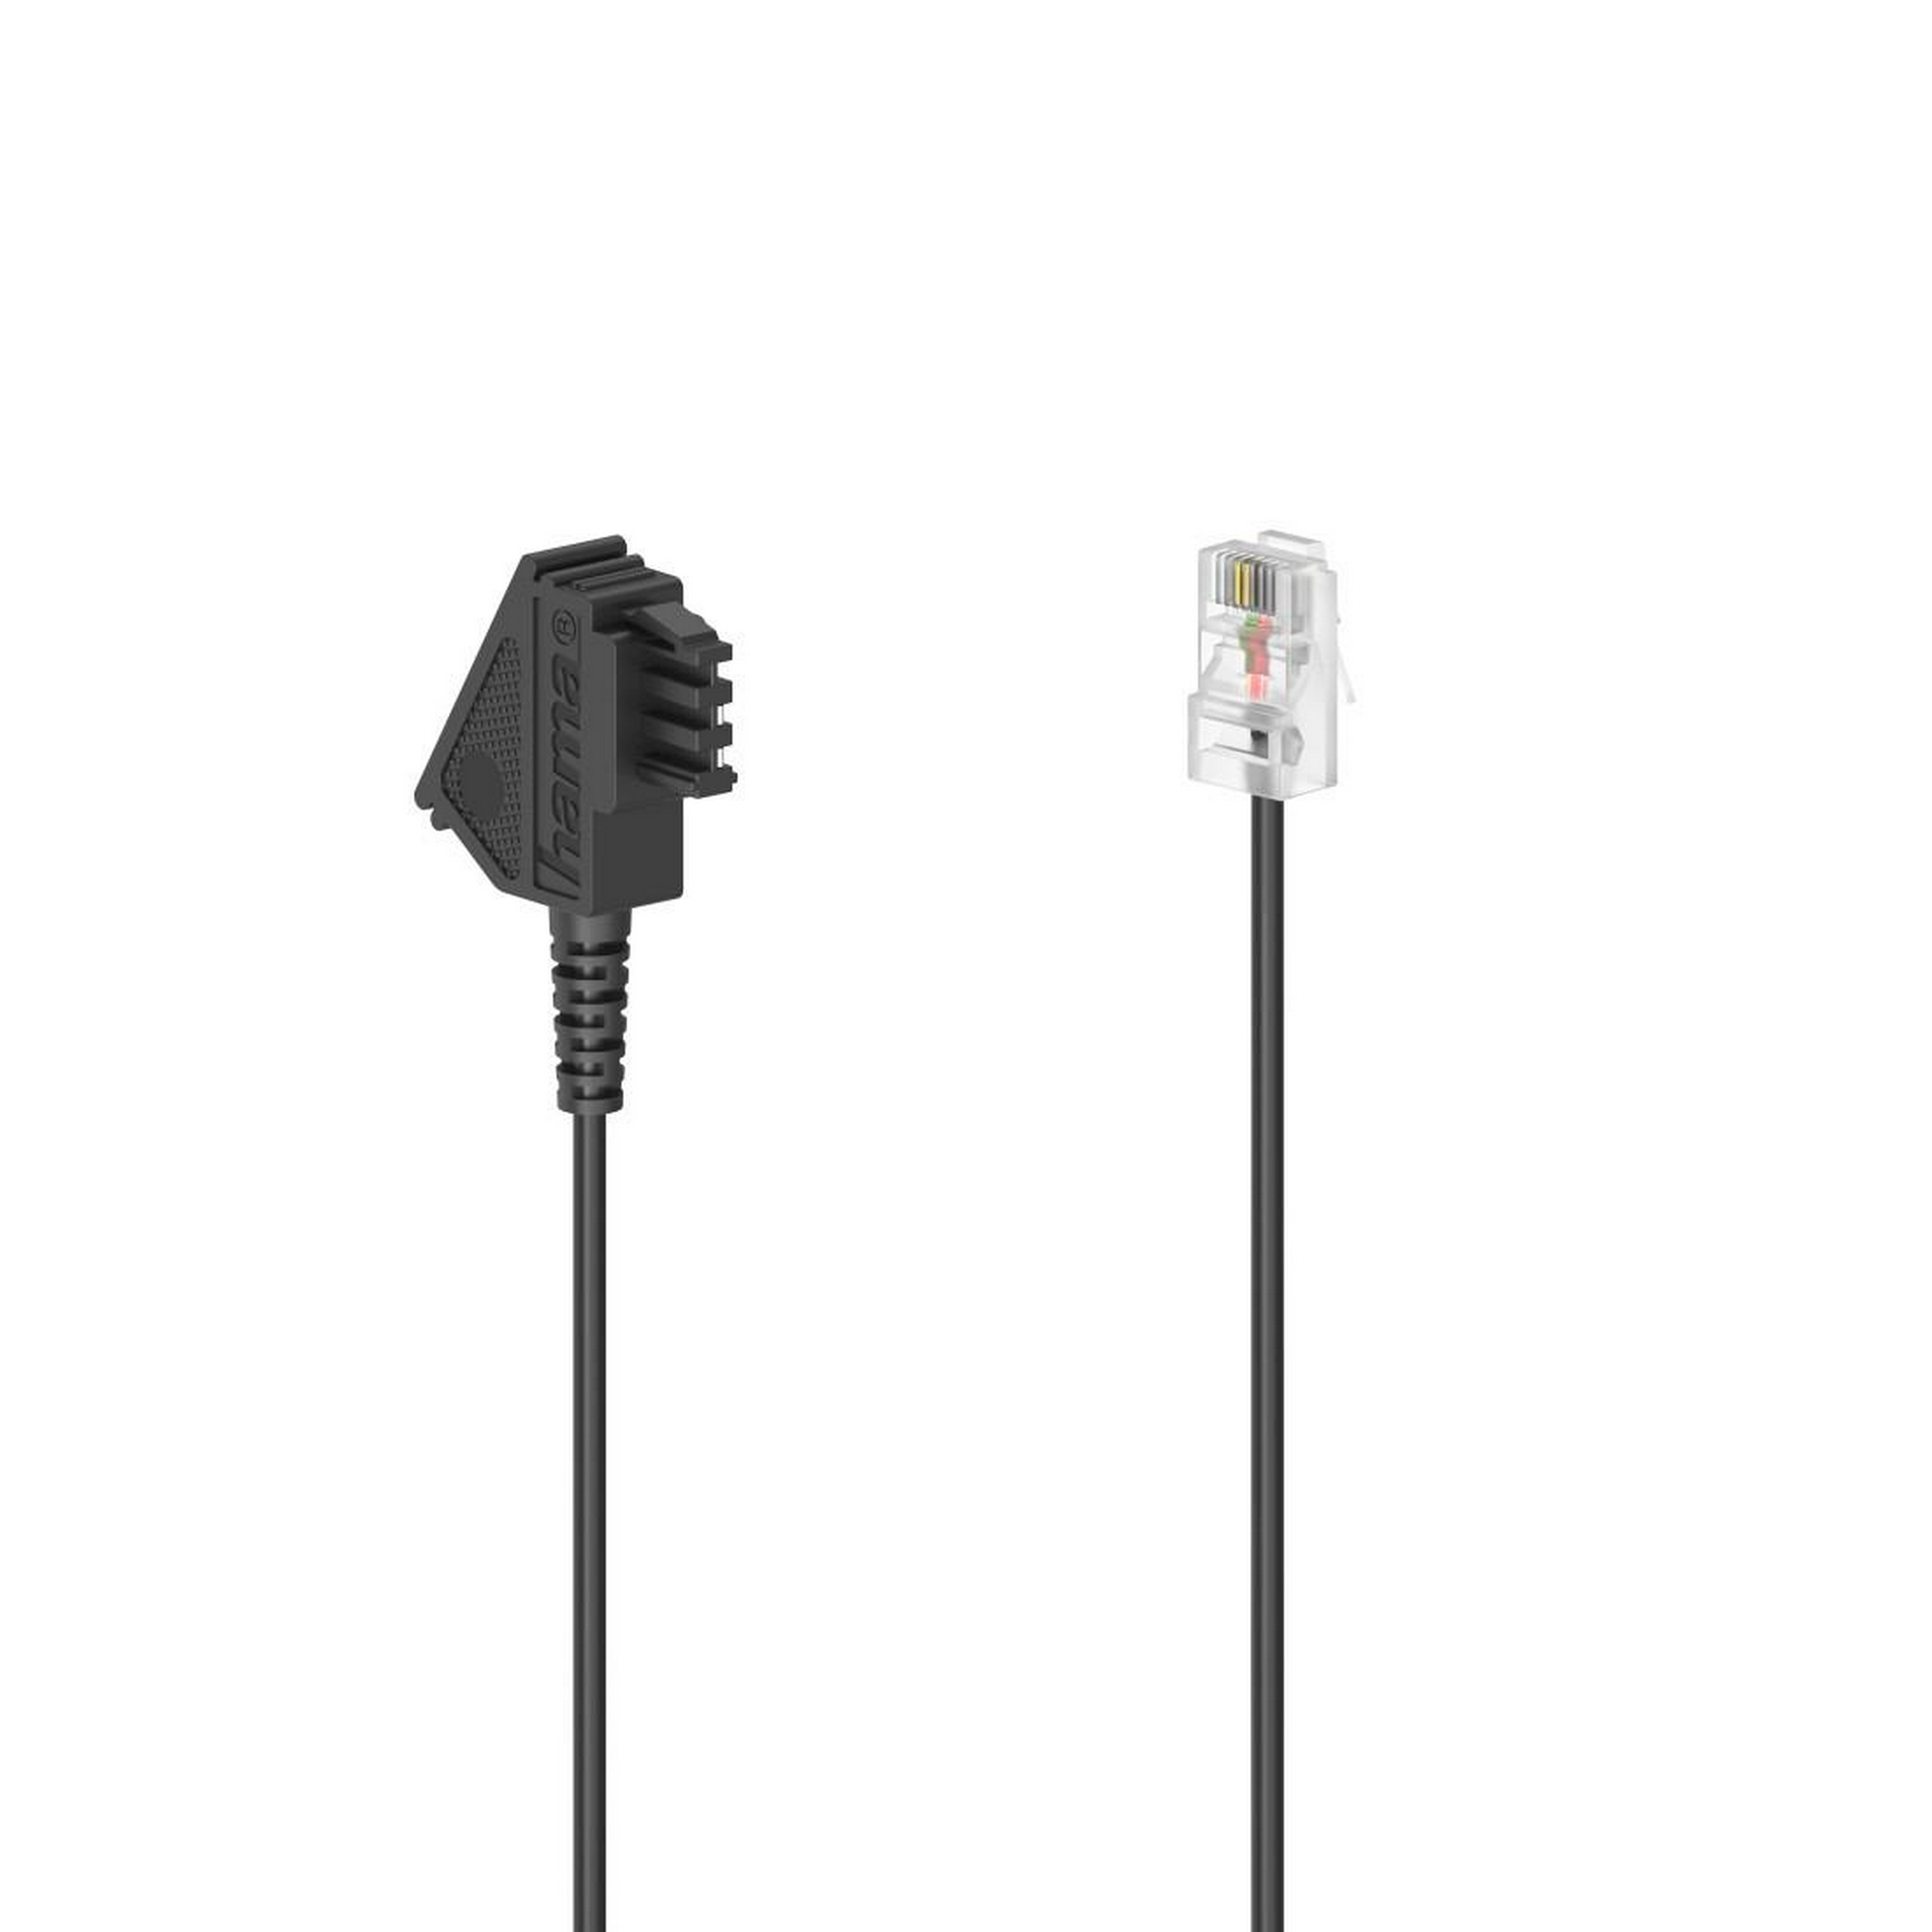 DSL-Box-Kabel schwarz TAE-F-Stecker mit Modular-Stecker 8p2c, 6 m + product picture